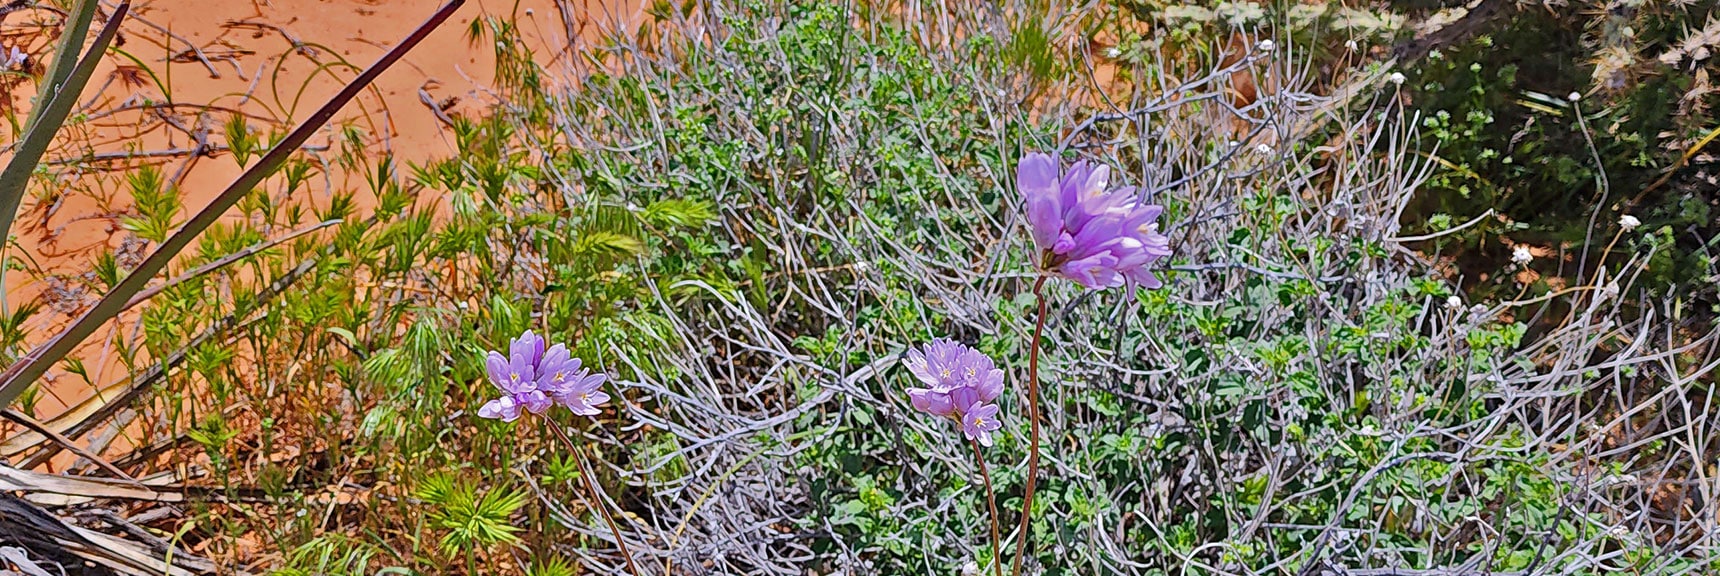 Mojave Aster (Xylorhiza tortifolia) : Annual Mojave Desert Wildflowers | Juniper Canyon | Red Rock Canyon National Conservation Area, Nevada | David Smith | LasVegasAreaTrails.com